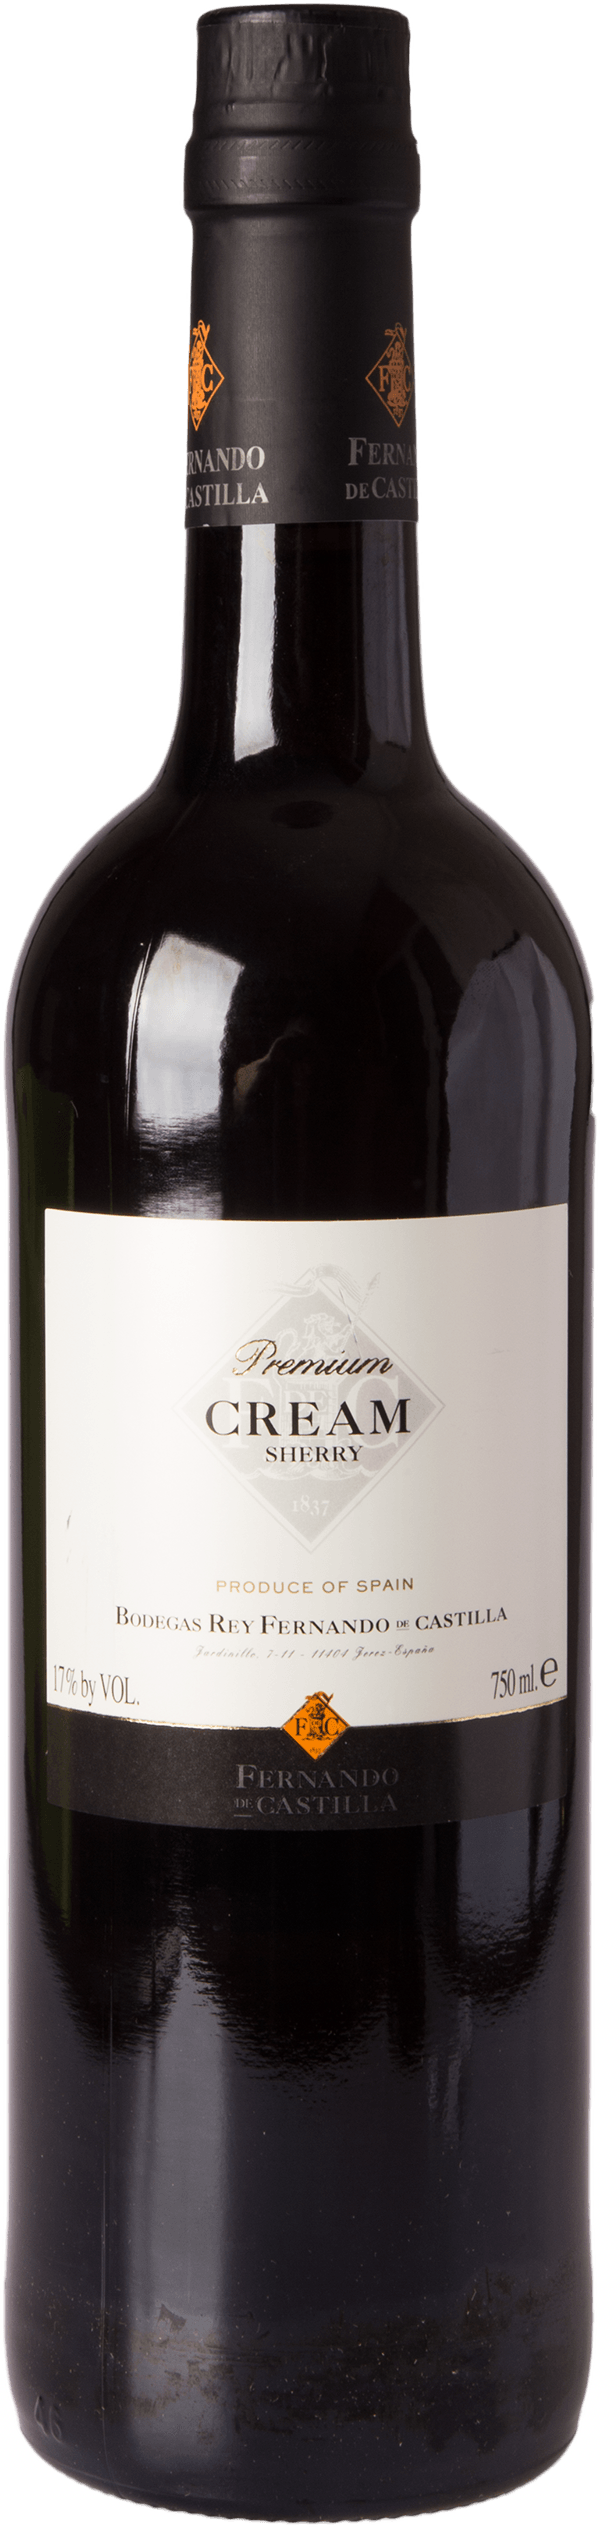 fernando-de-castilla-sherry-premium-cream-17-prozent